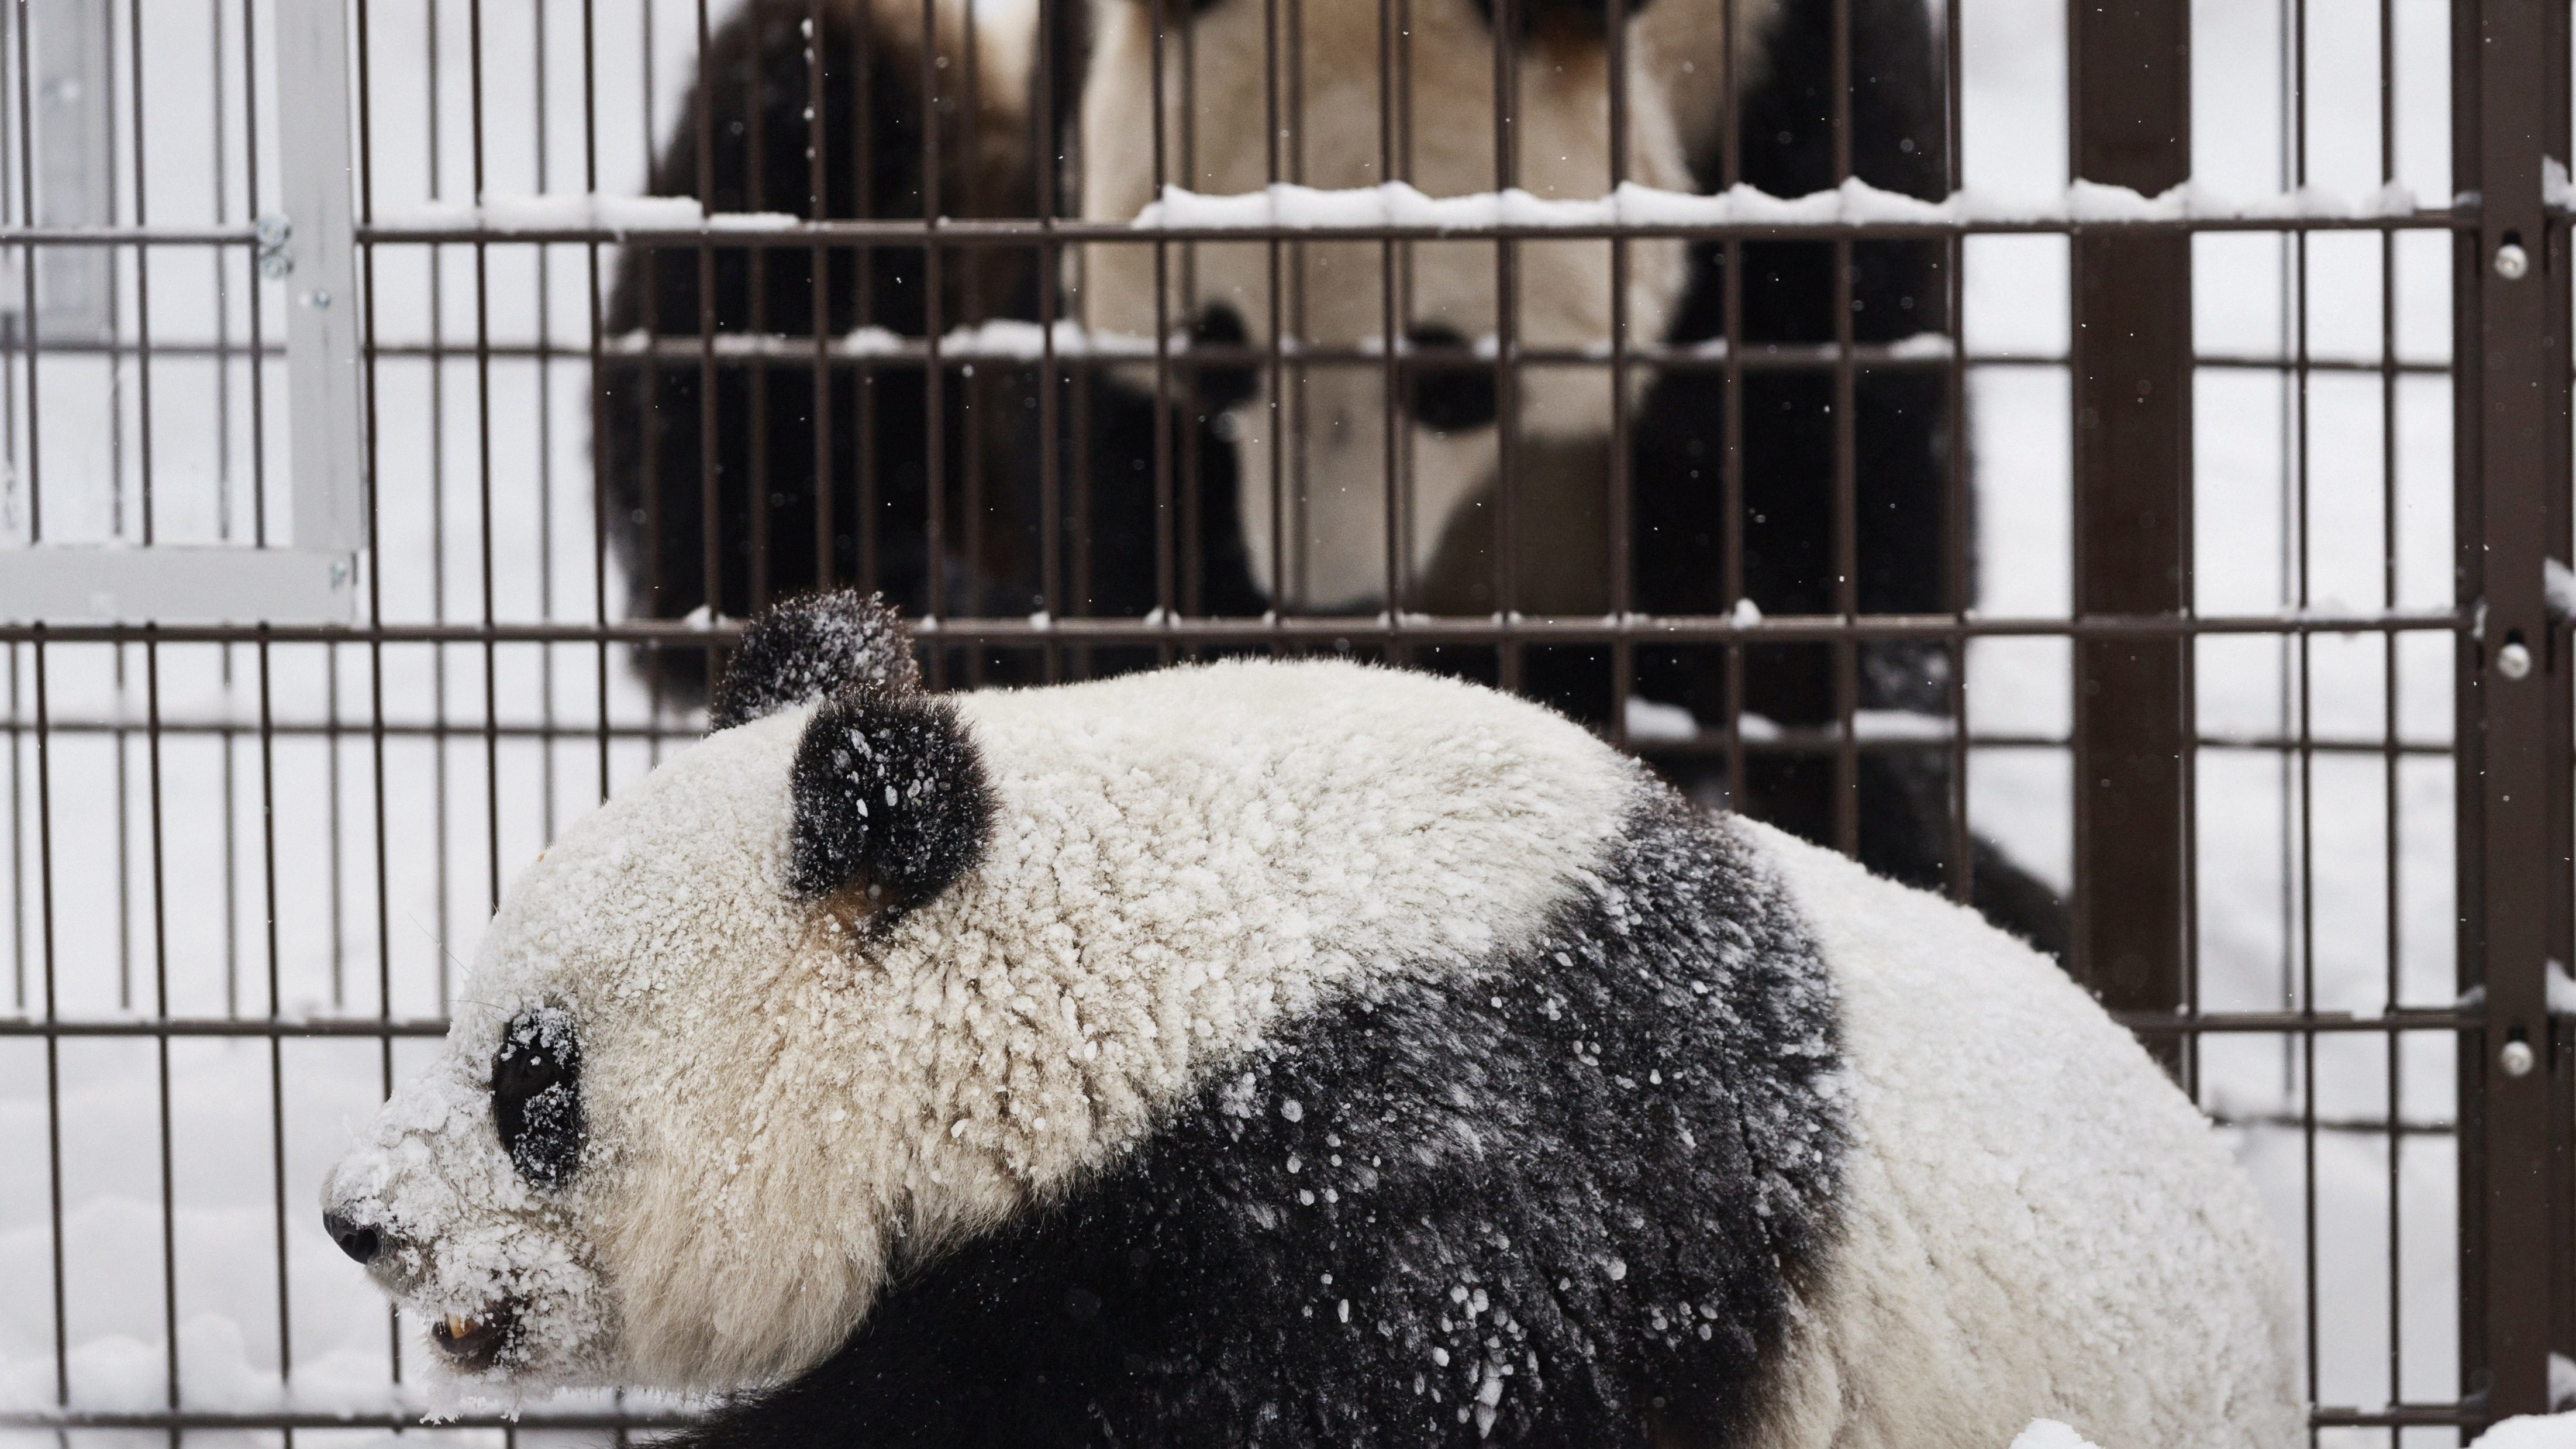 The zoo will make a final decision on the pandas next month. /Lehtikuva/Roni Rekomaa